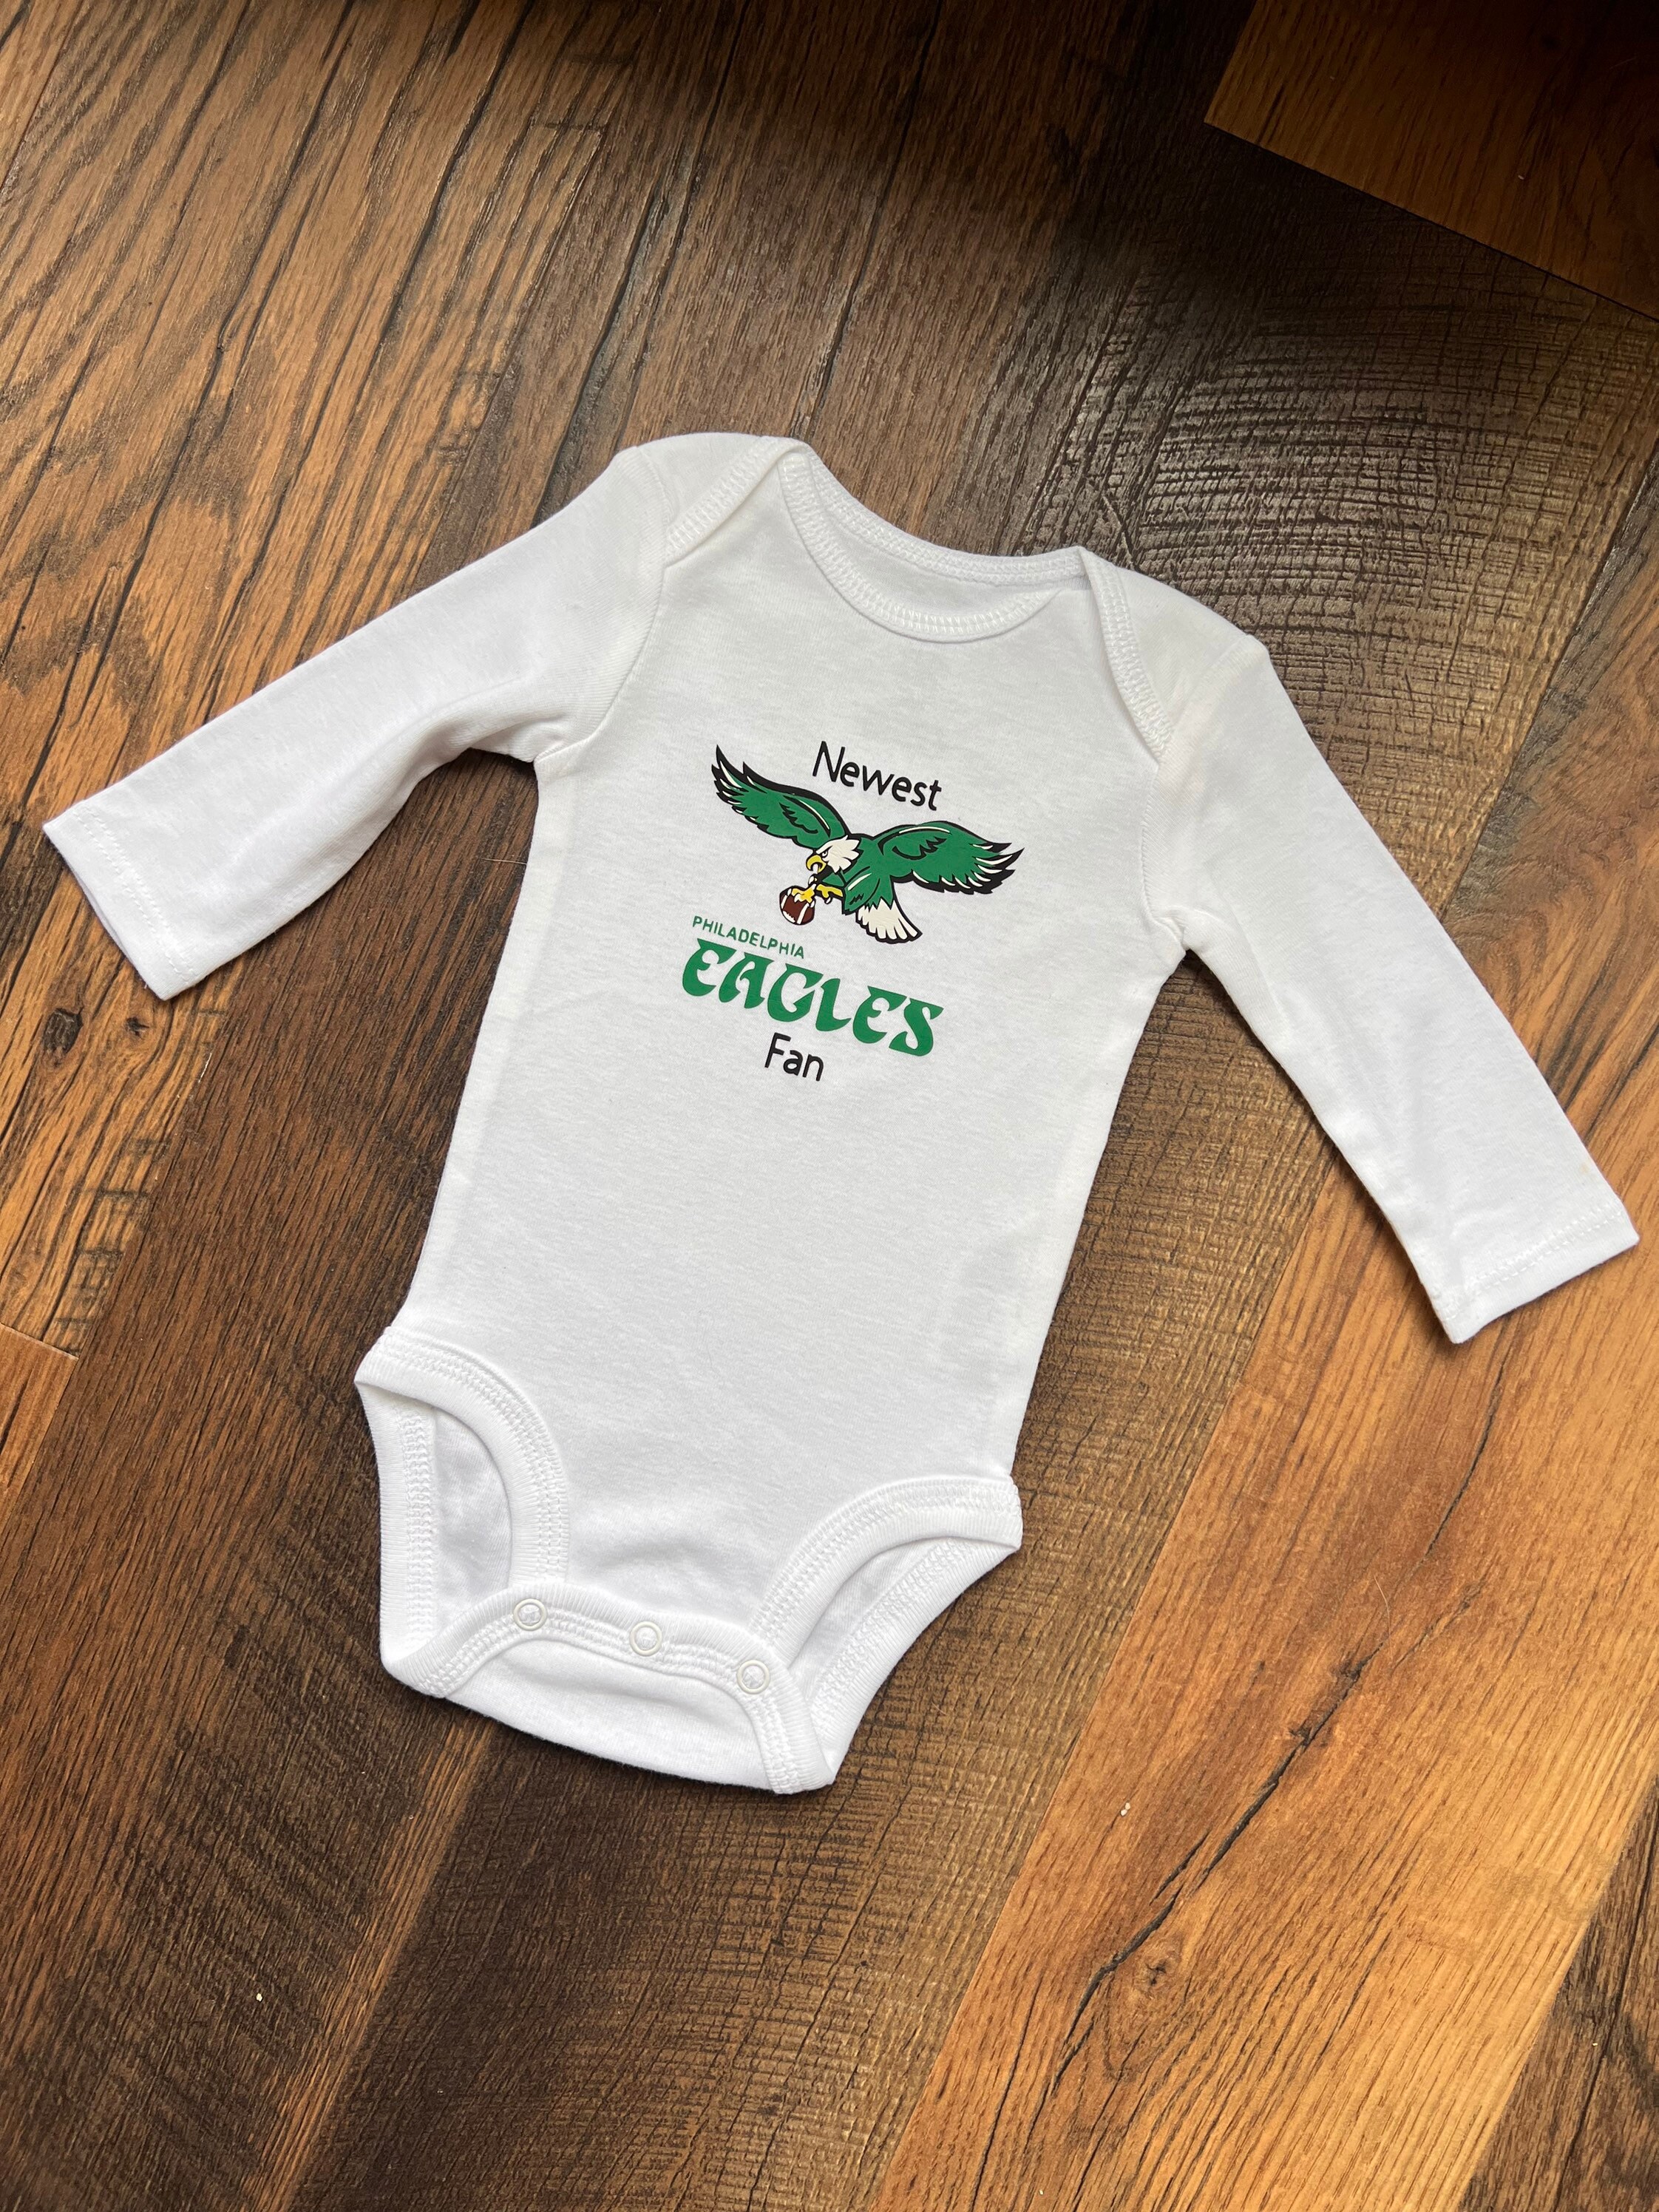 Philadelphia Eagles Baby - Etsy